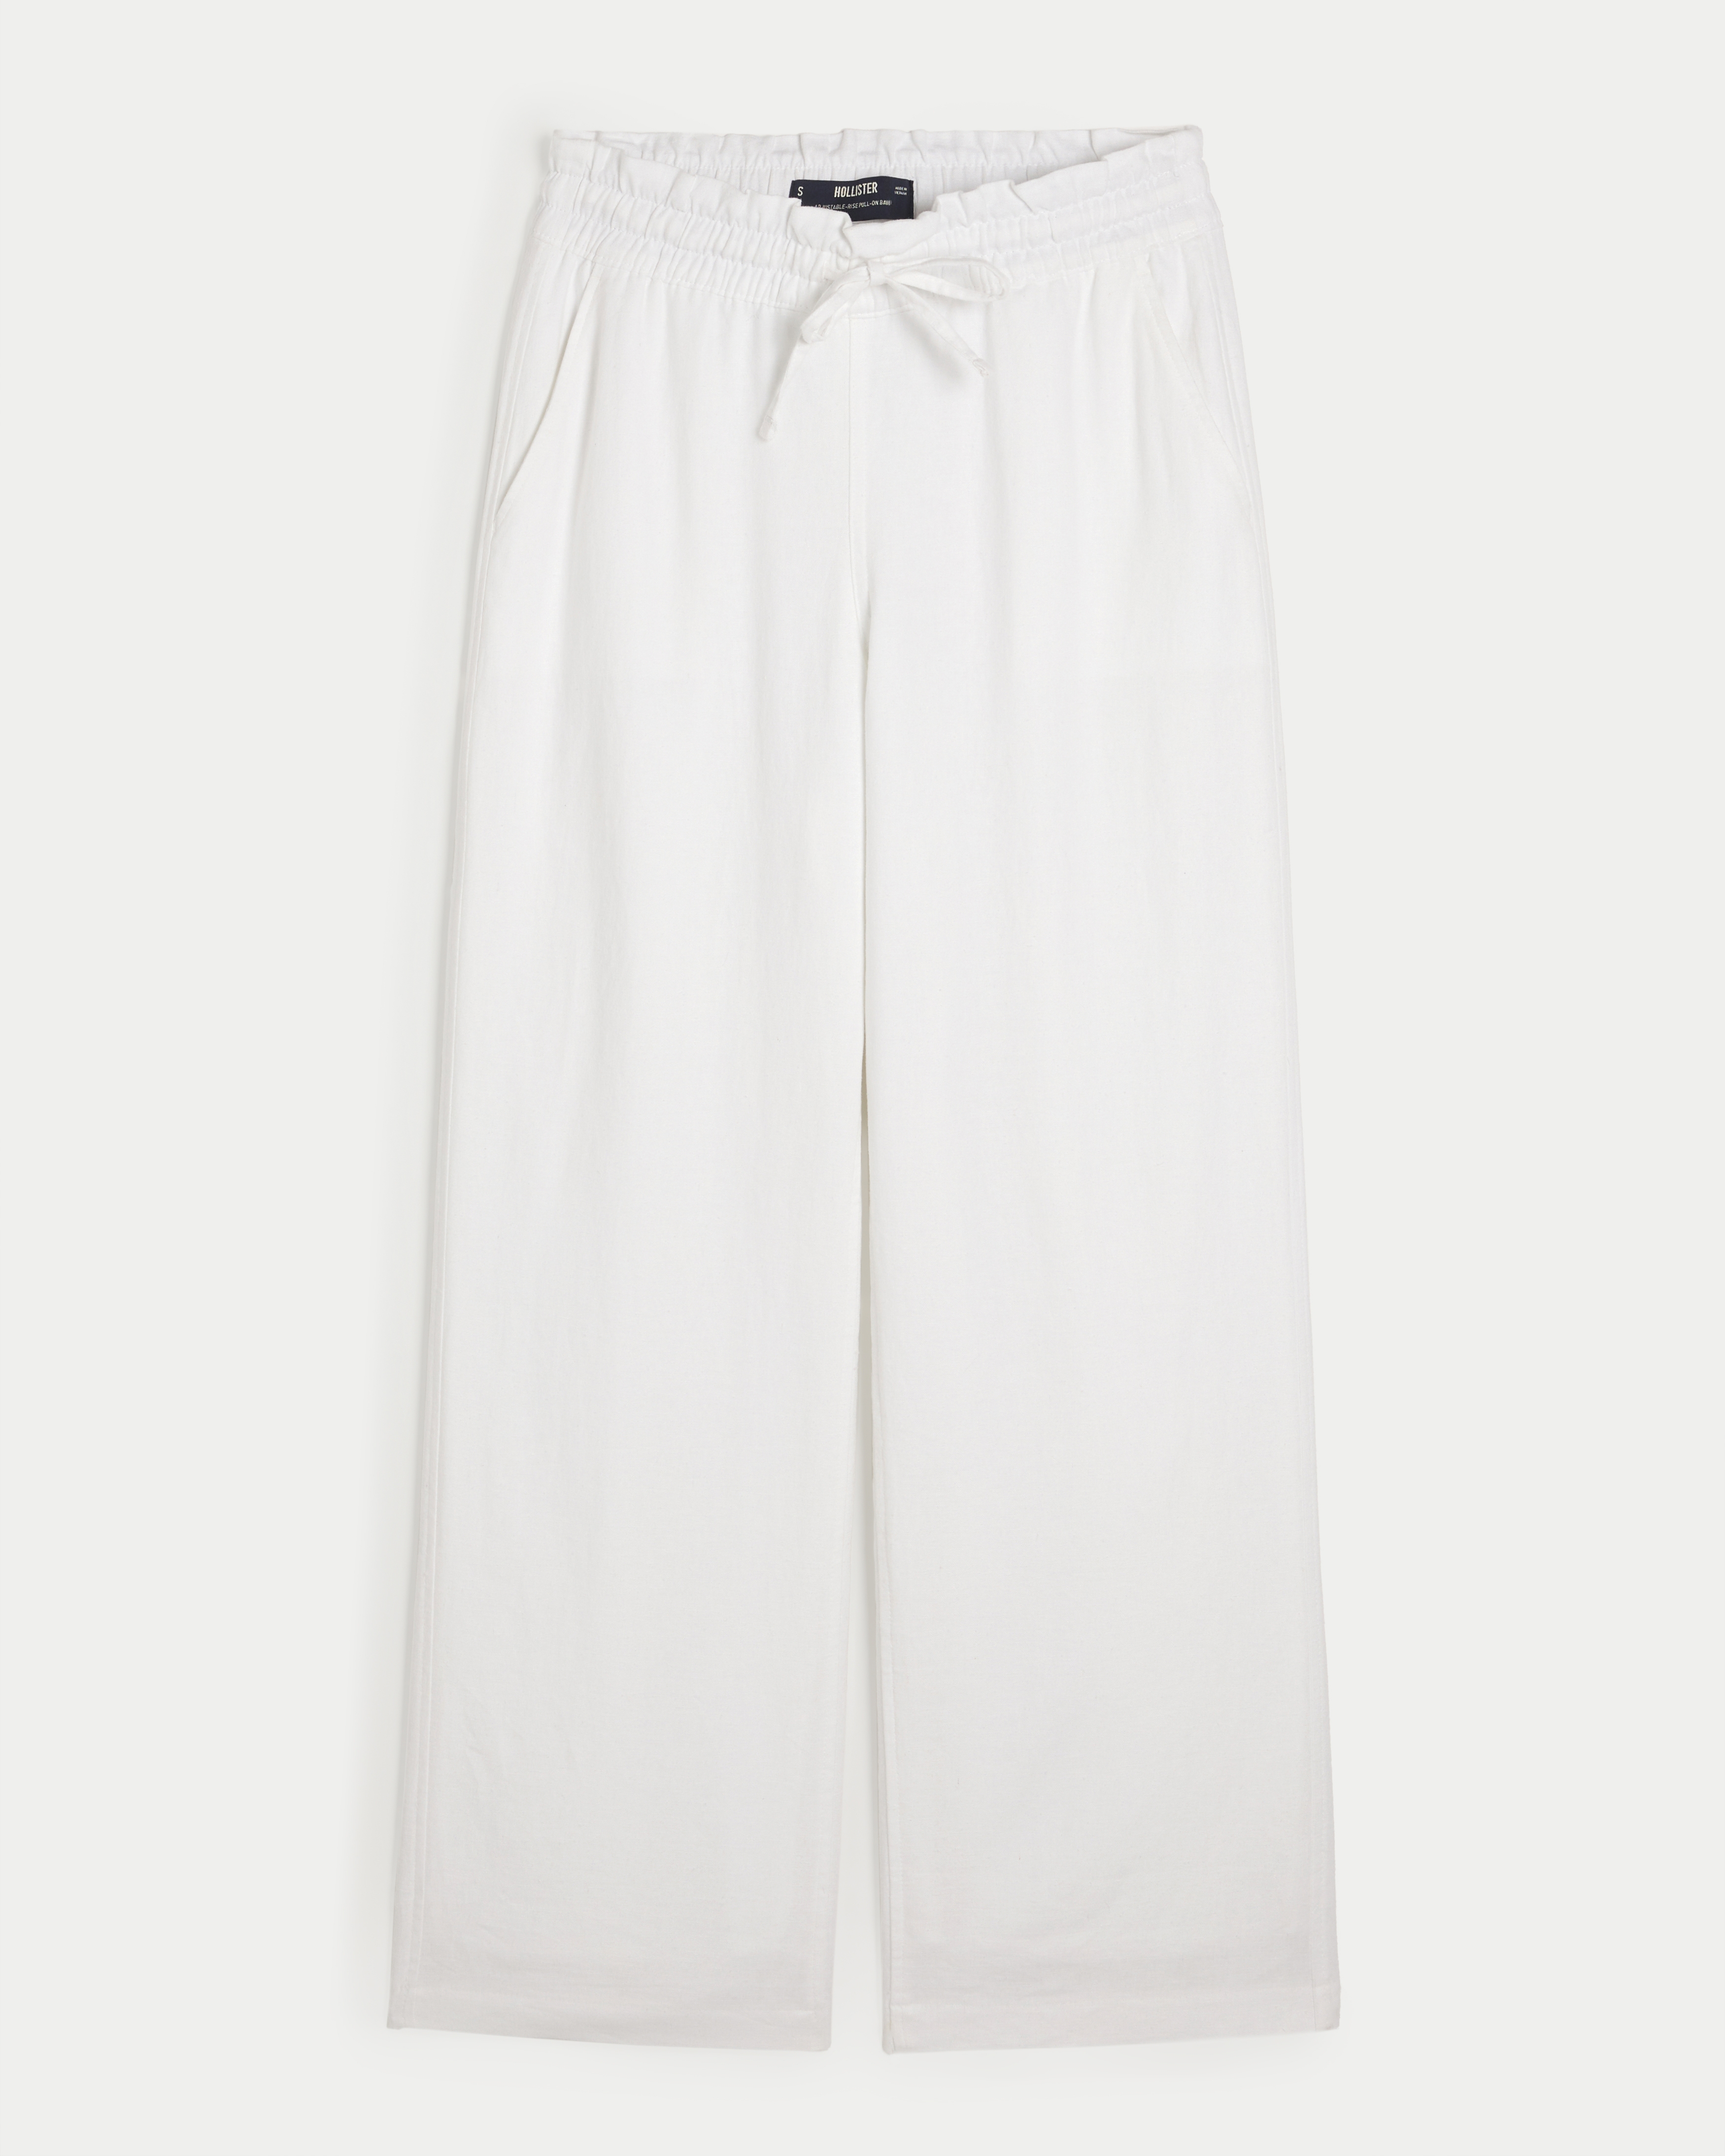 Adjustable Rise Linen Blend Pull-On Baggy Pants